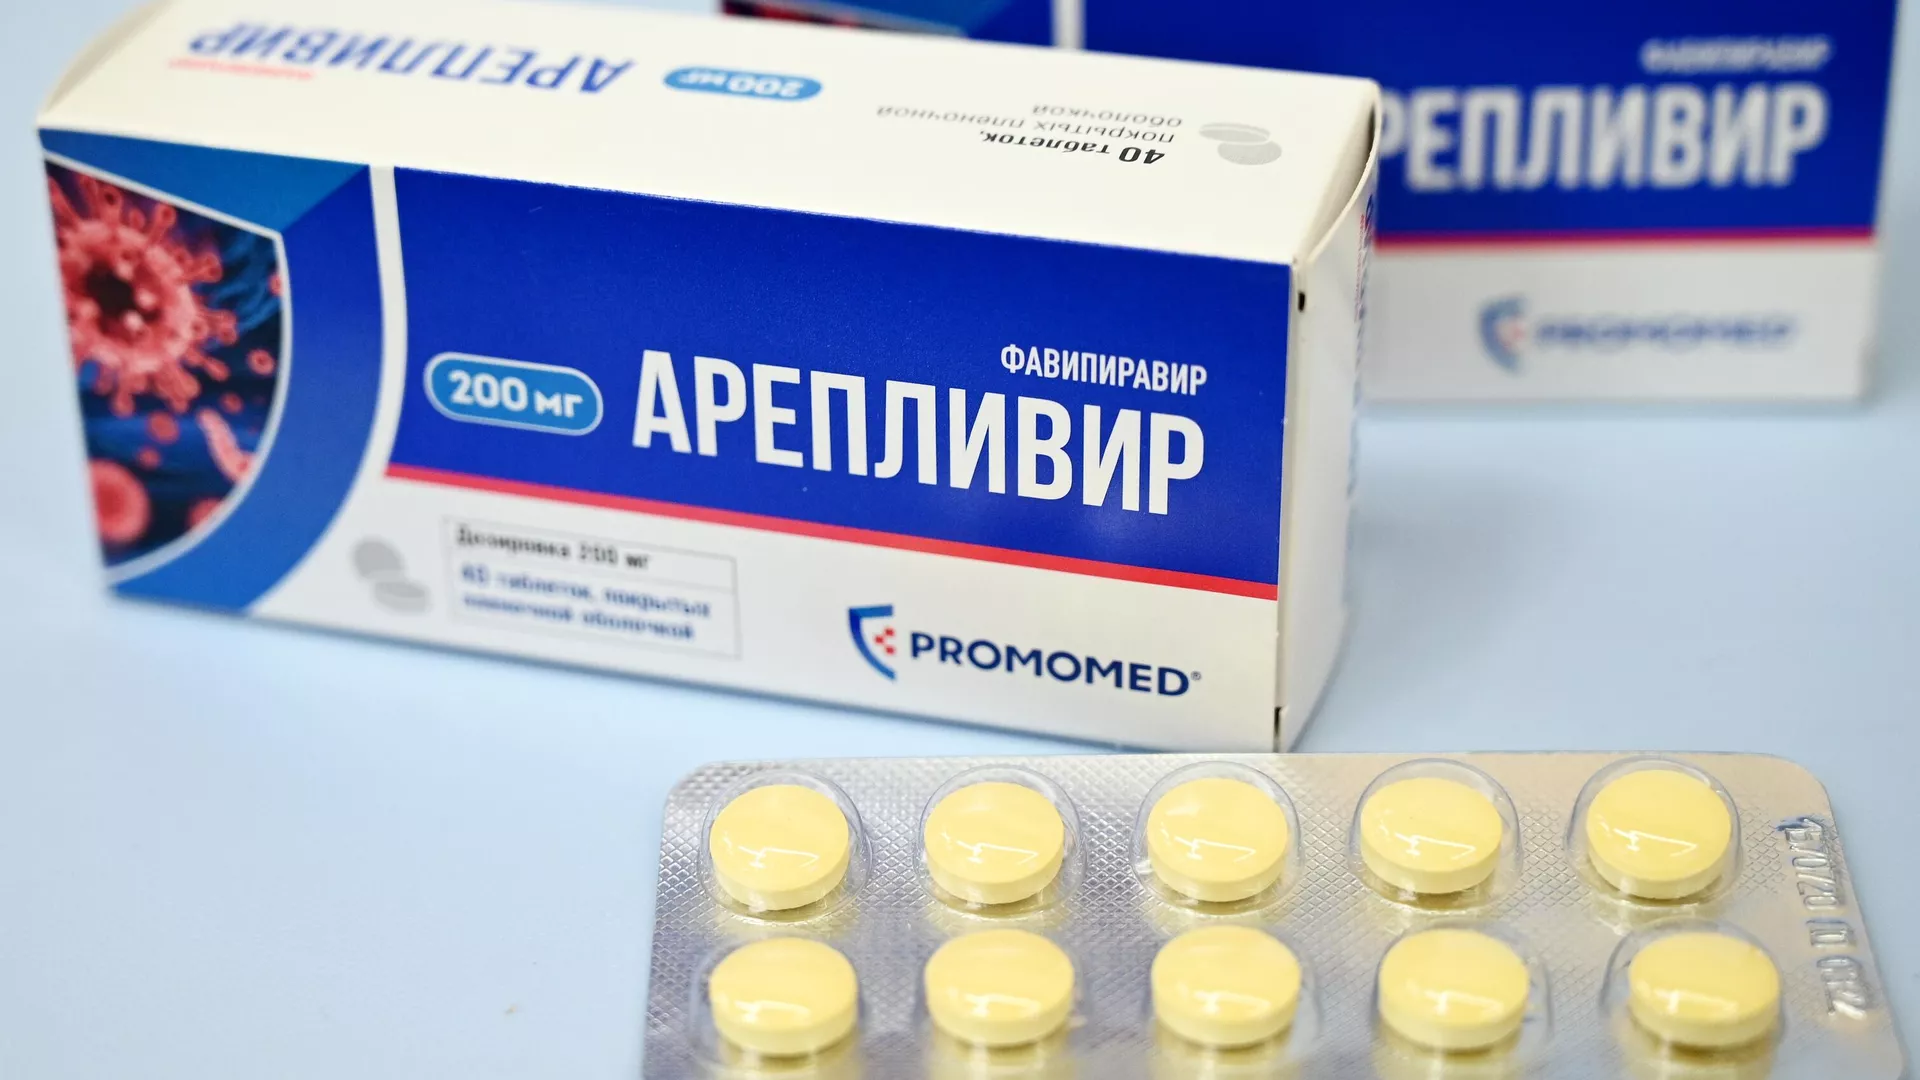 Российский препарат от COVID-19 "Арепливир" перестали продавать за рубеж